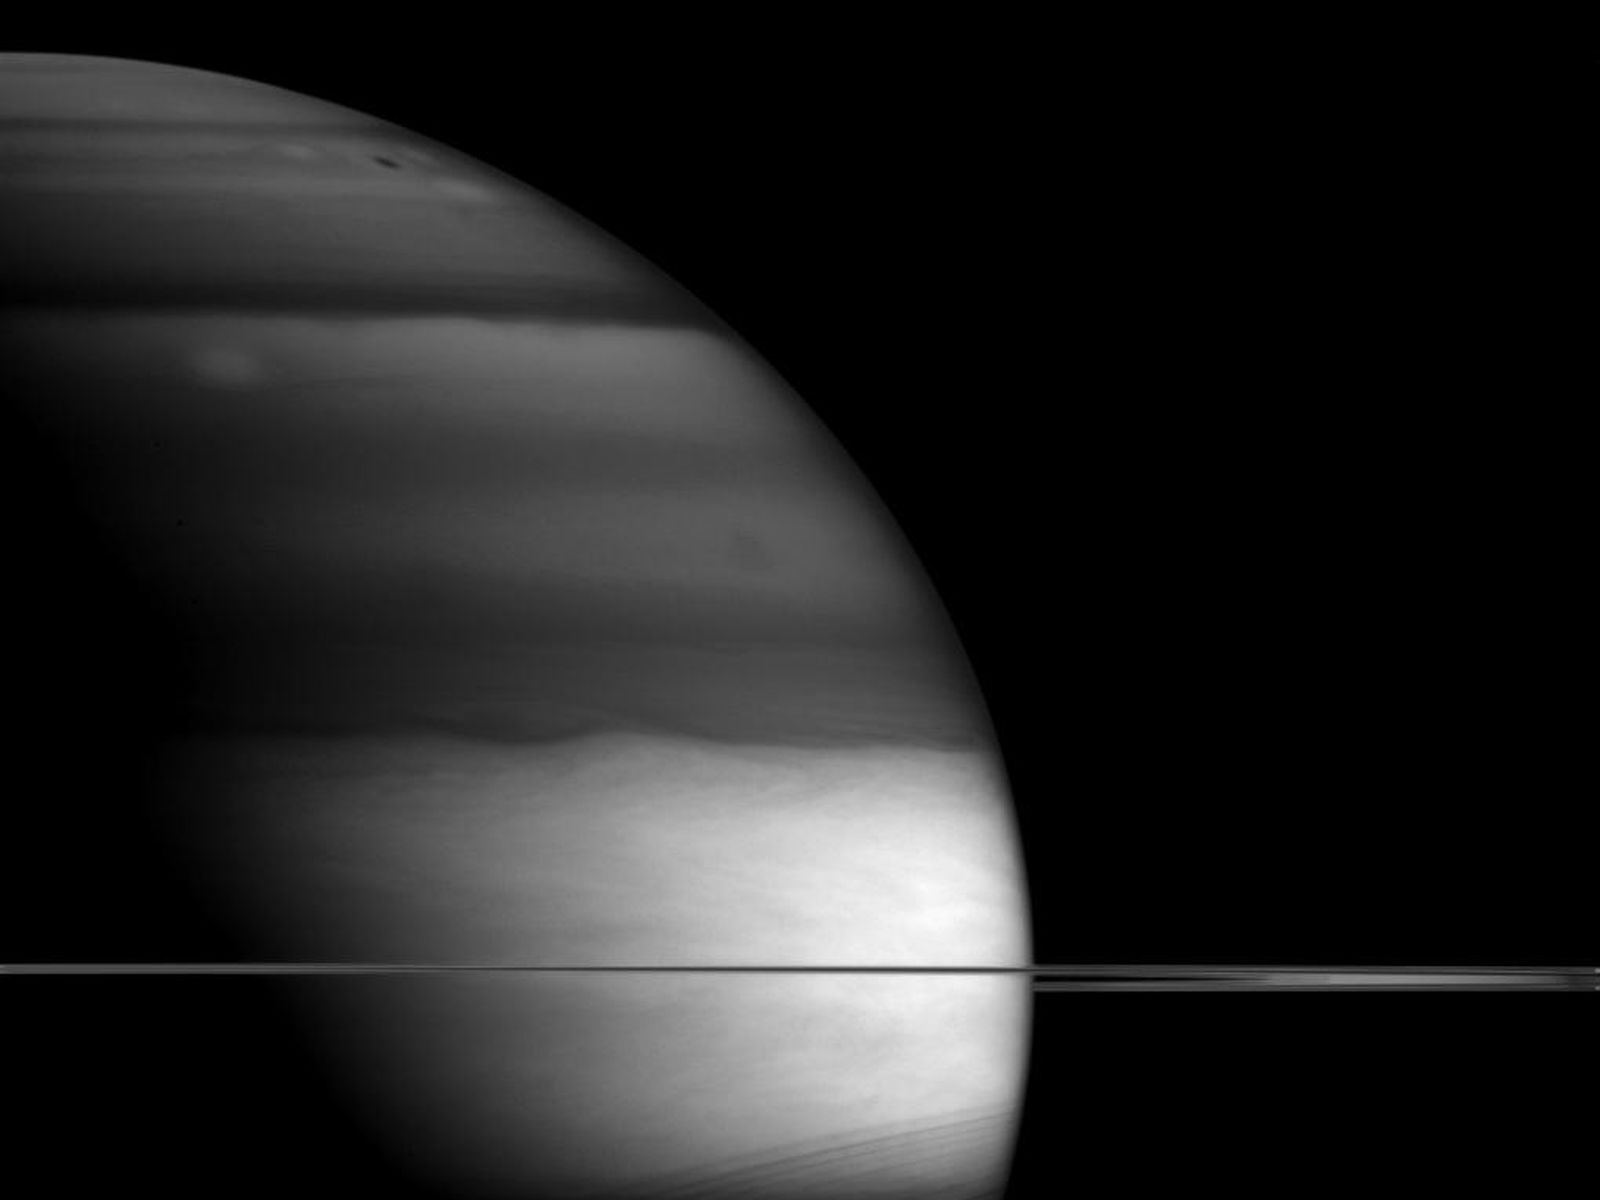 La NASA ha tomado esta impresionante foto de Saturno